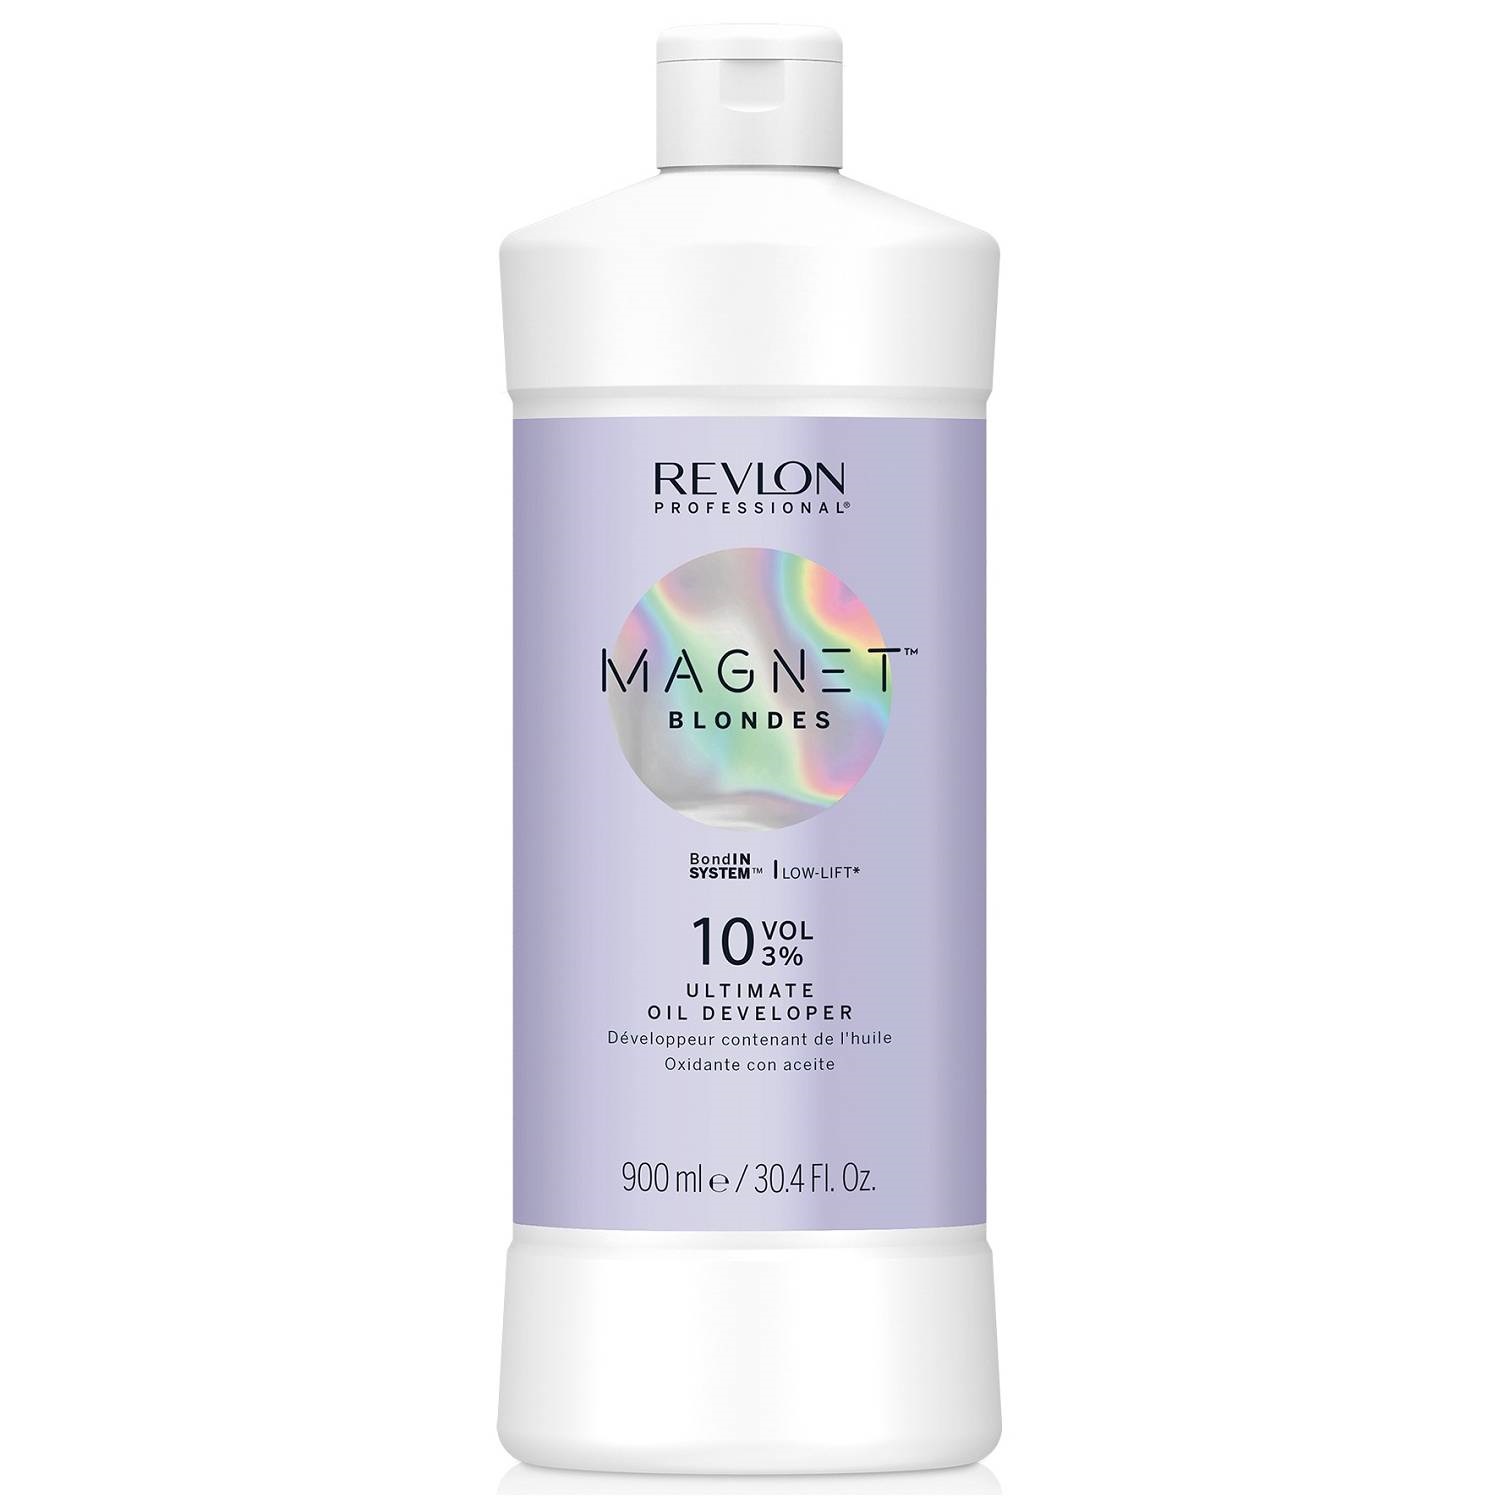 Revlon Professional Крем-пероксид с добавлением масла 3% Ultimate Oil Developer 10 vol, 900 мл (Revlon Professional, Magnet Blondes)